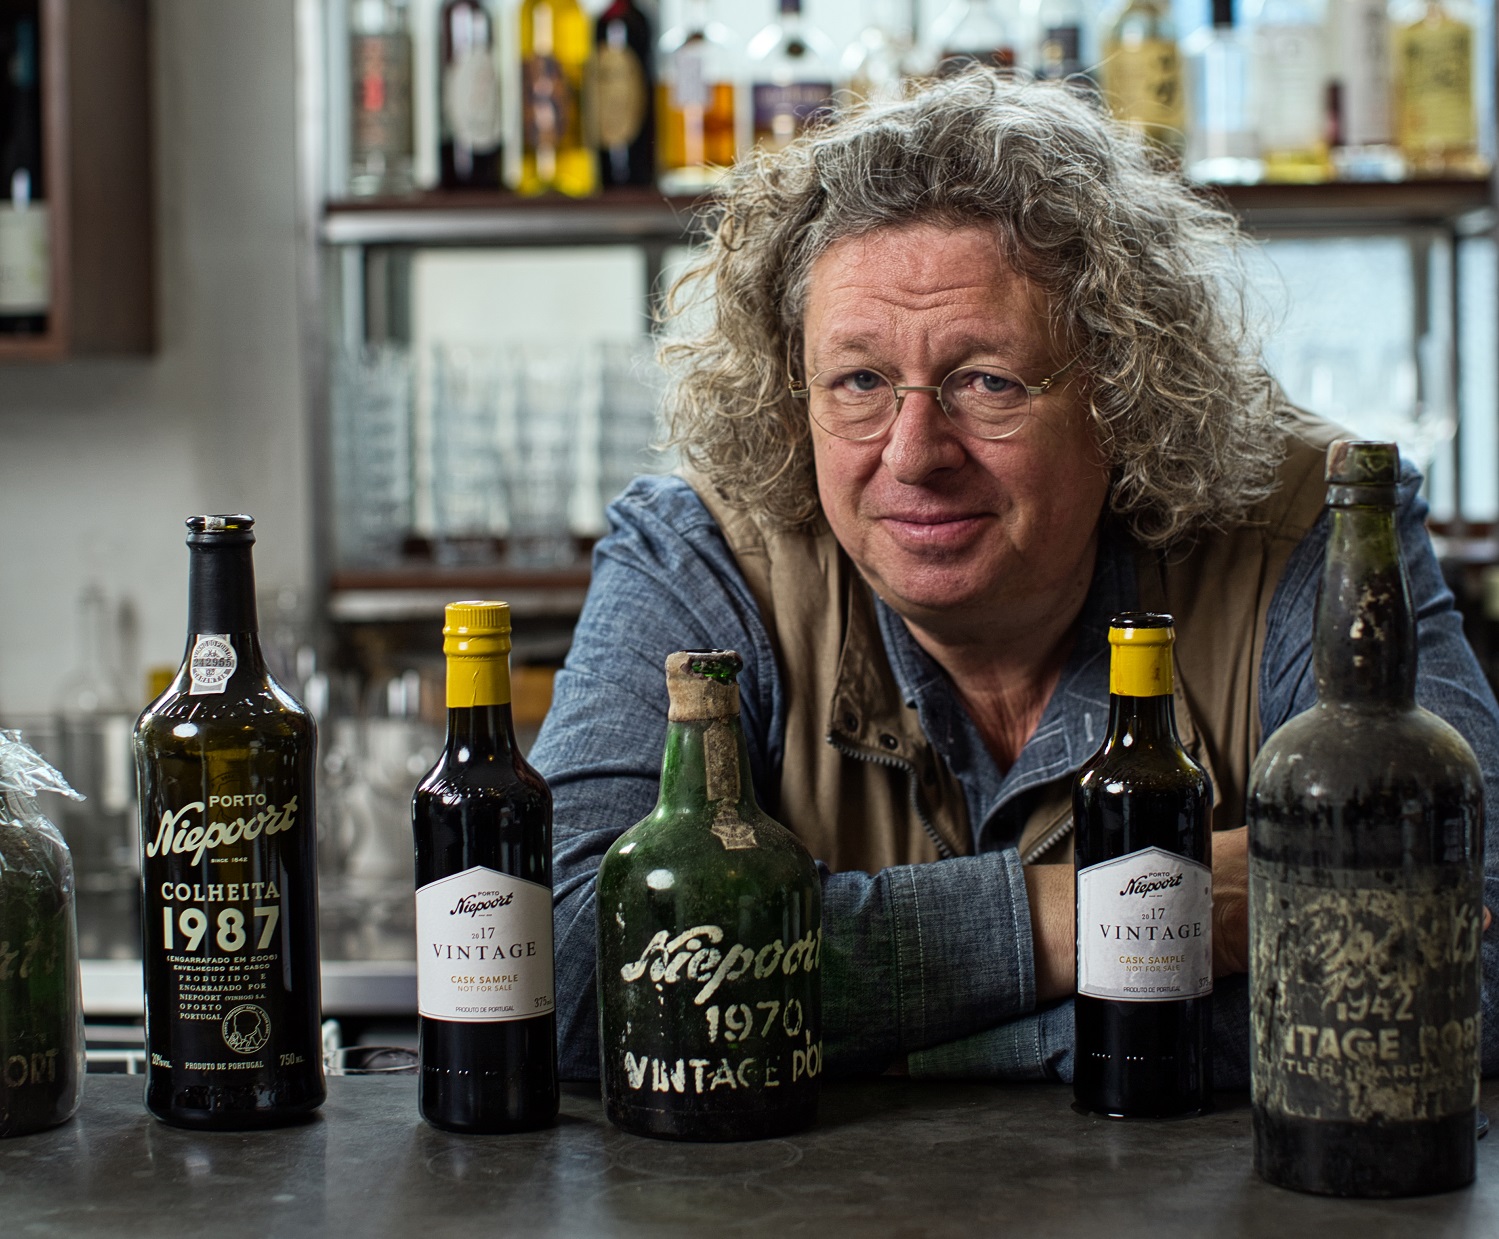 Dirk Niepoort is one of Portugal's most respected winemakers